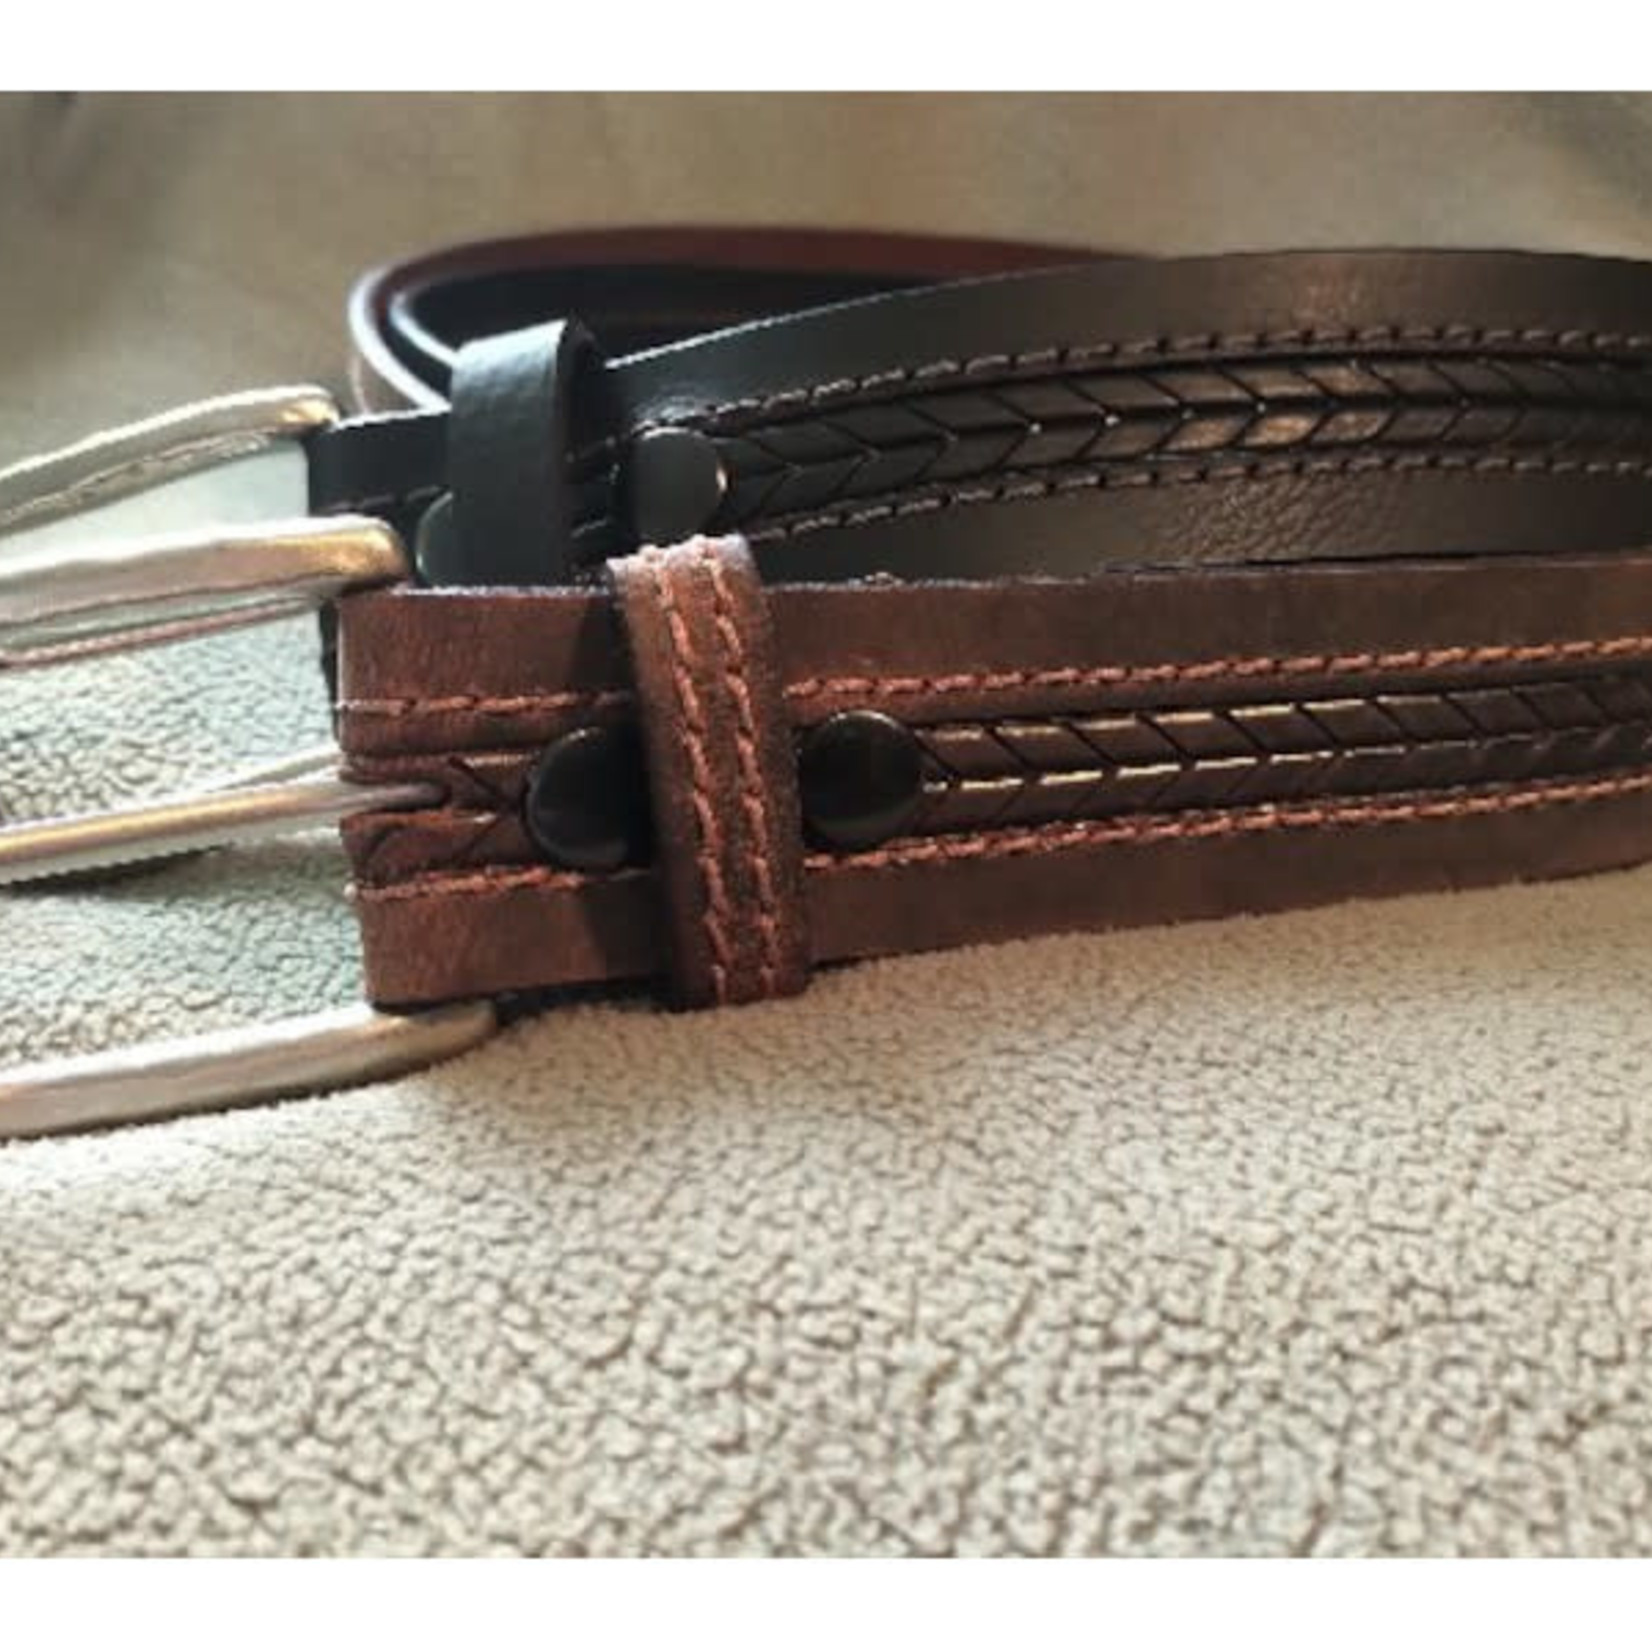 Europa Dezines Europa Dezines Raised Embossed & Stitched Genuine Leather Belt